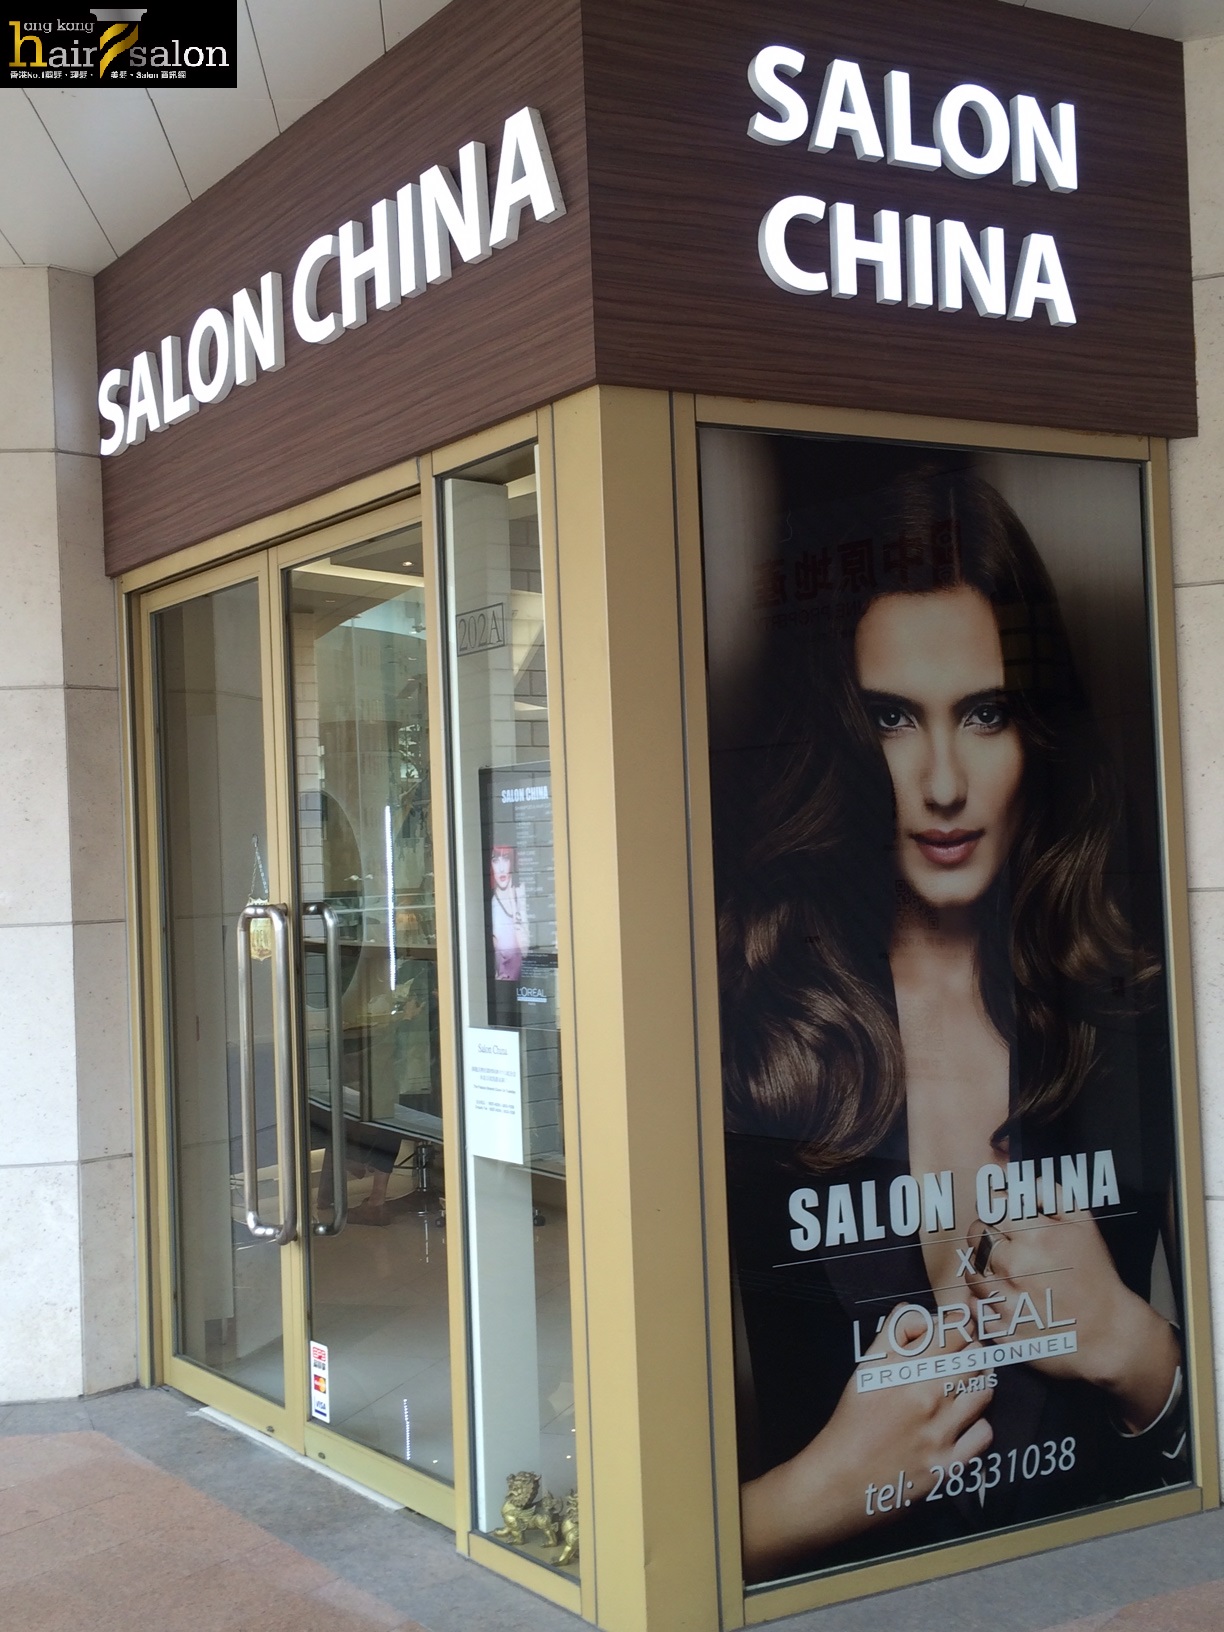 髮型屋 Salon:  Salon China (御龍山商場, The Palazzo)